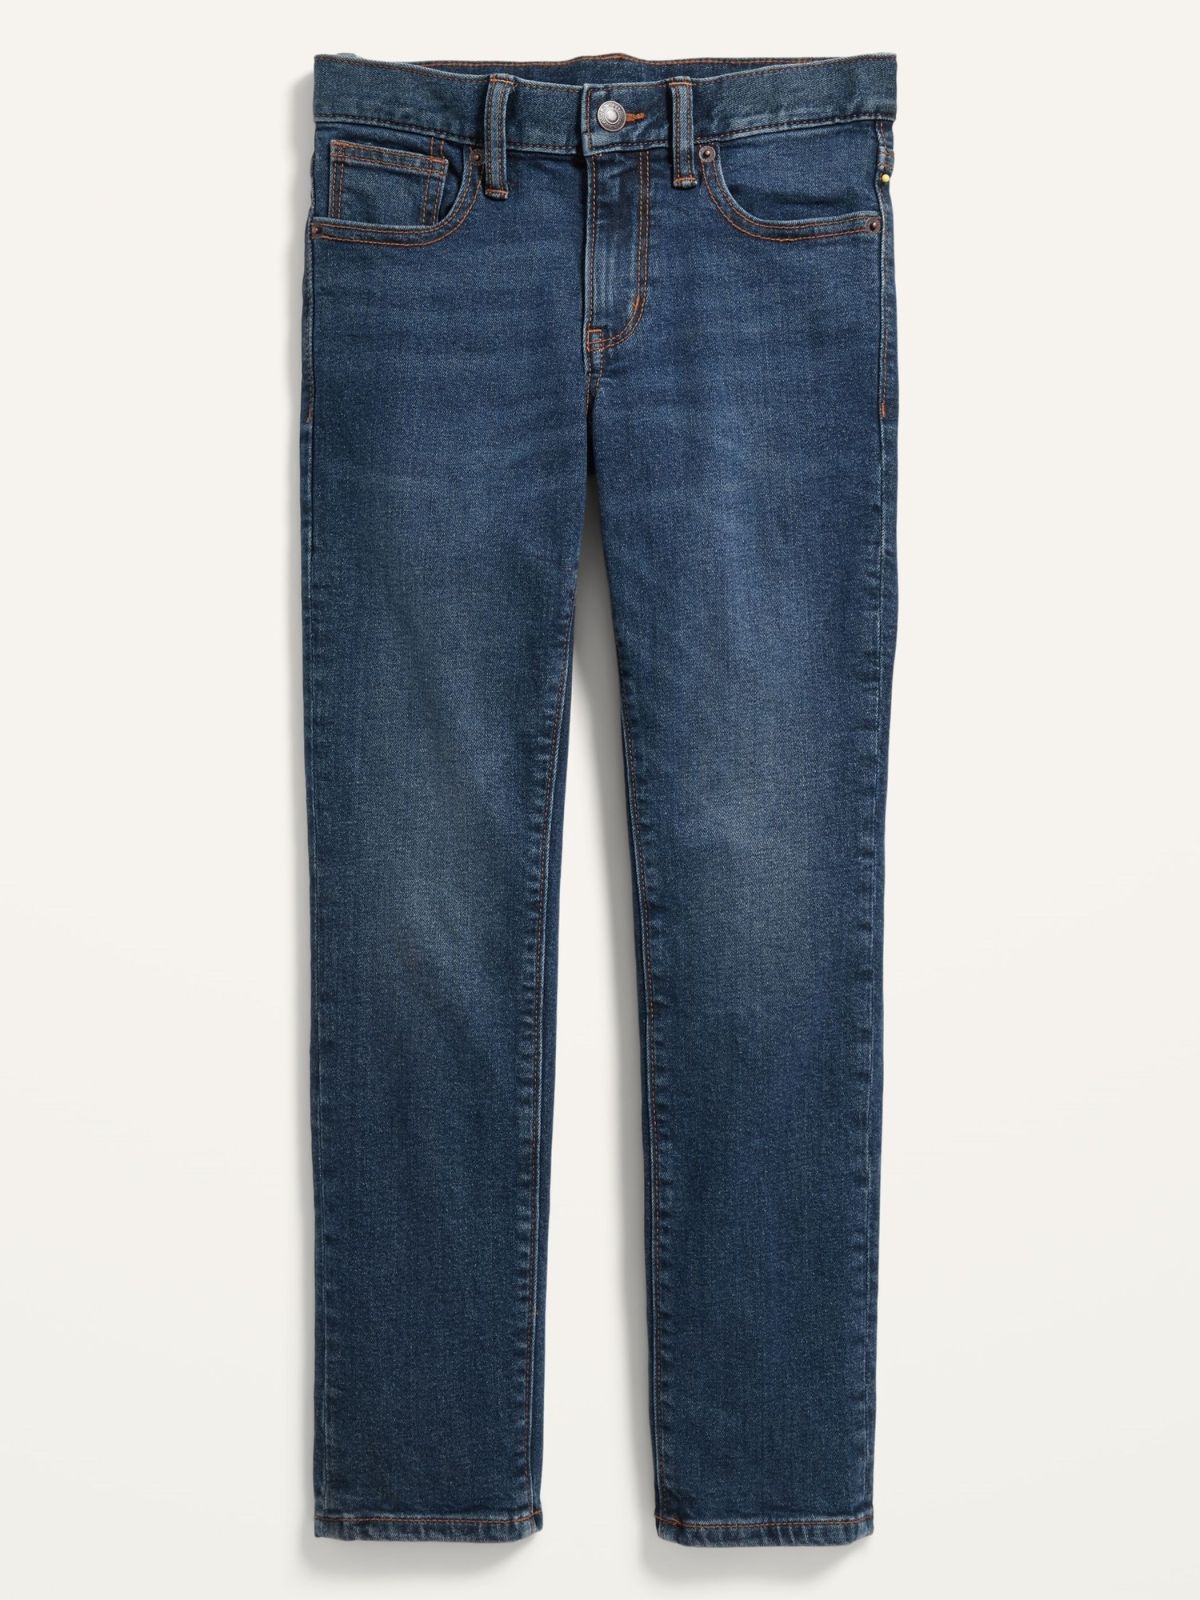  ג'ינס ארוך סקיני / בנים של OLD NAVY